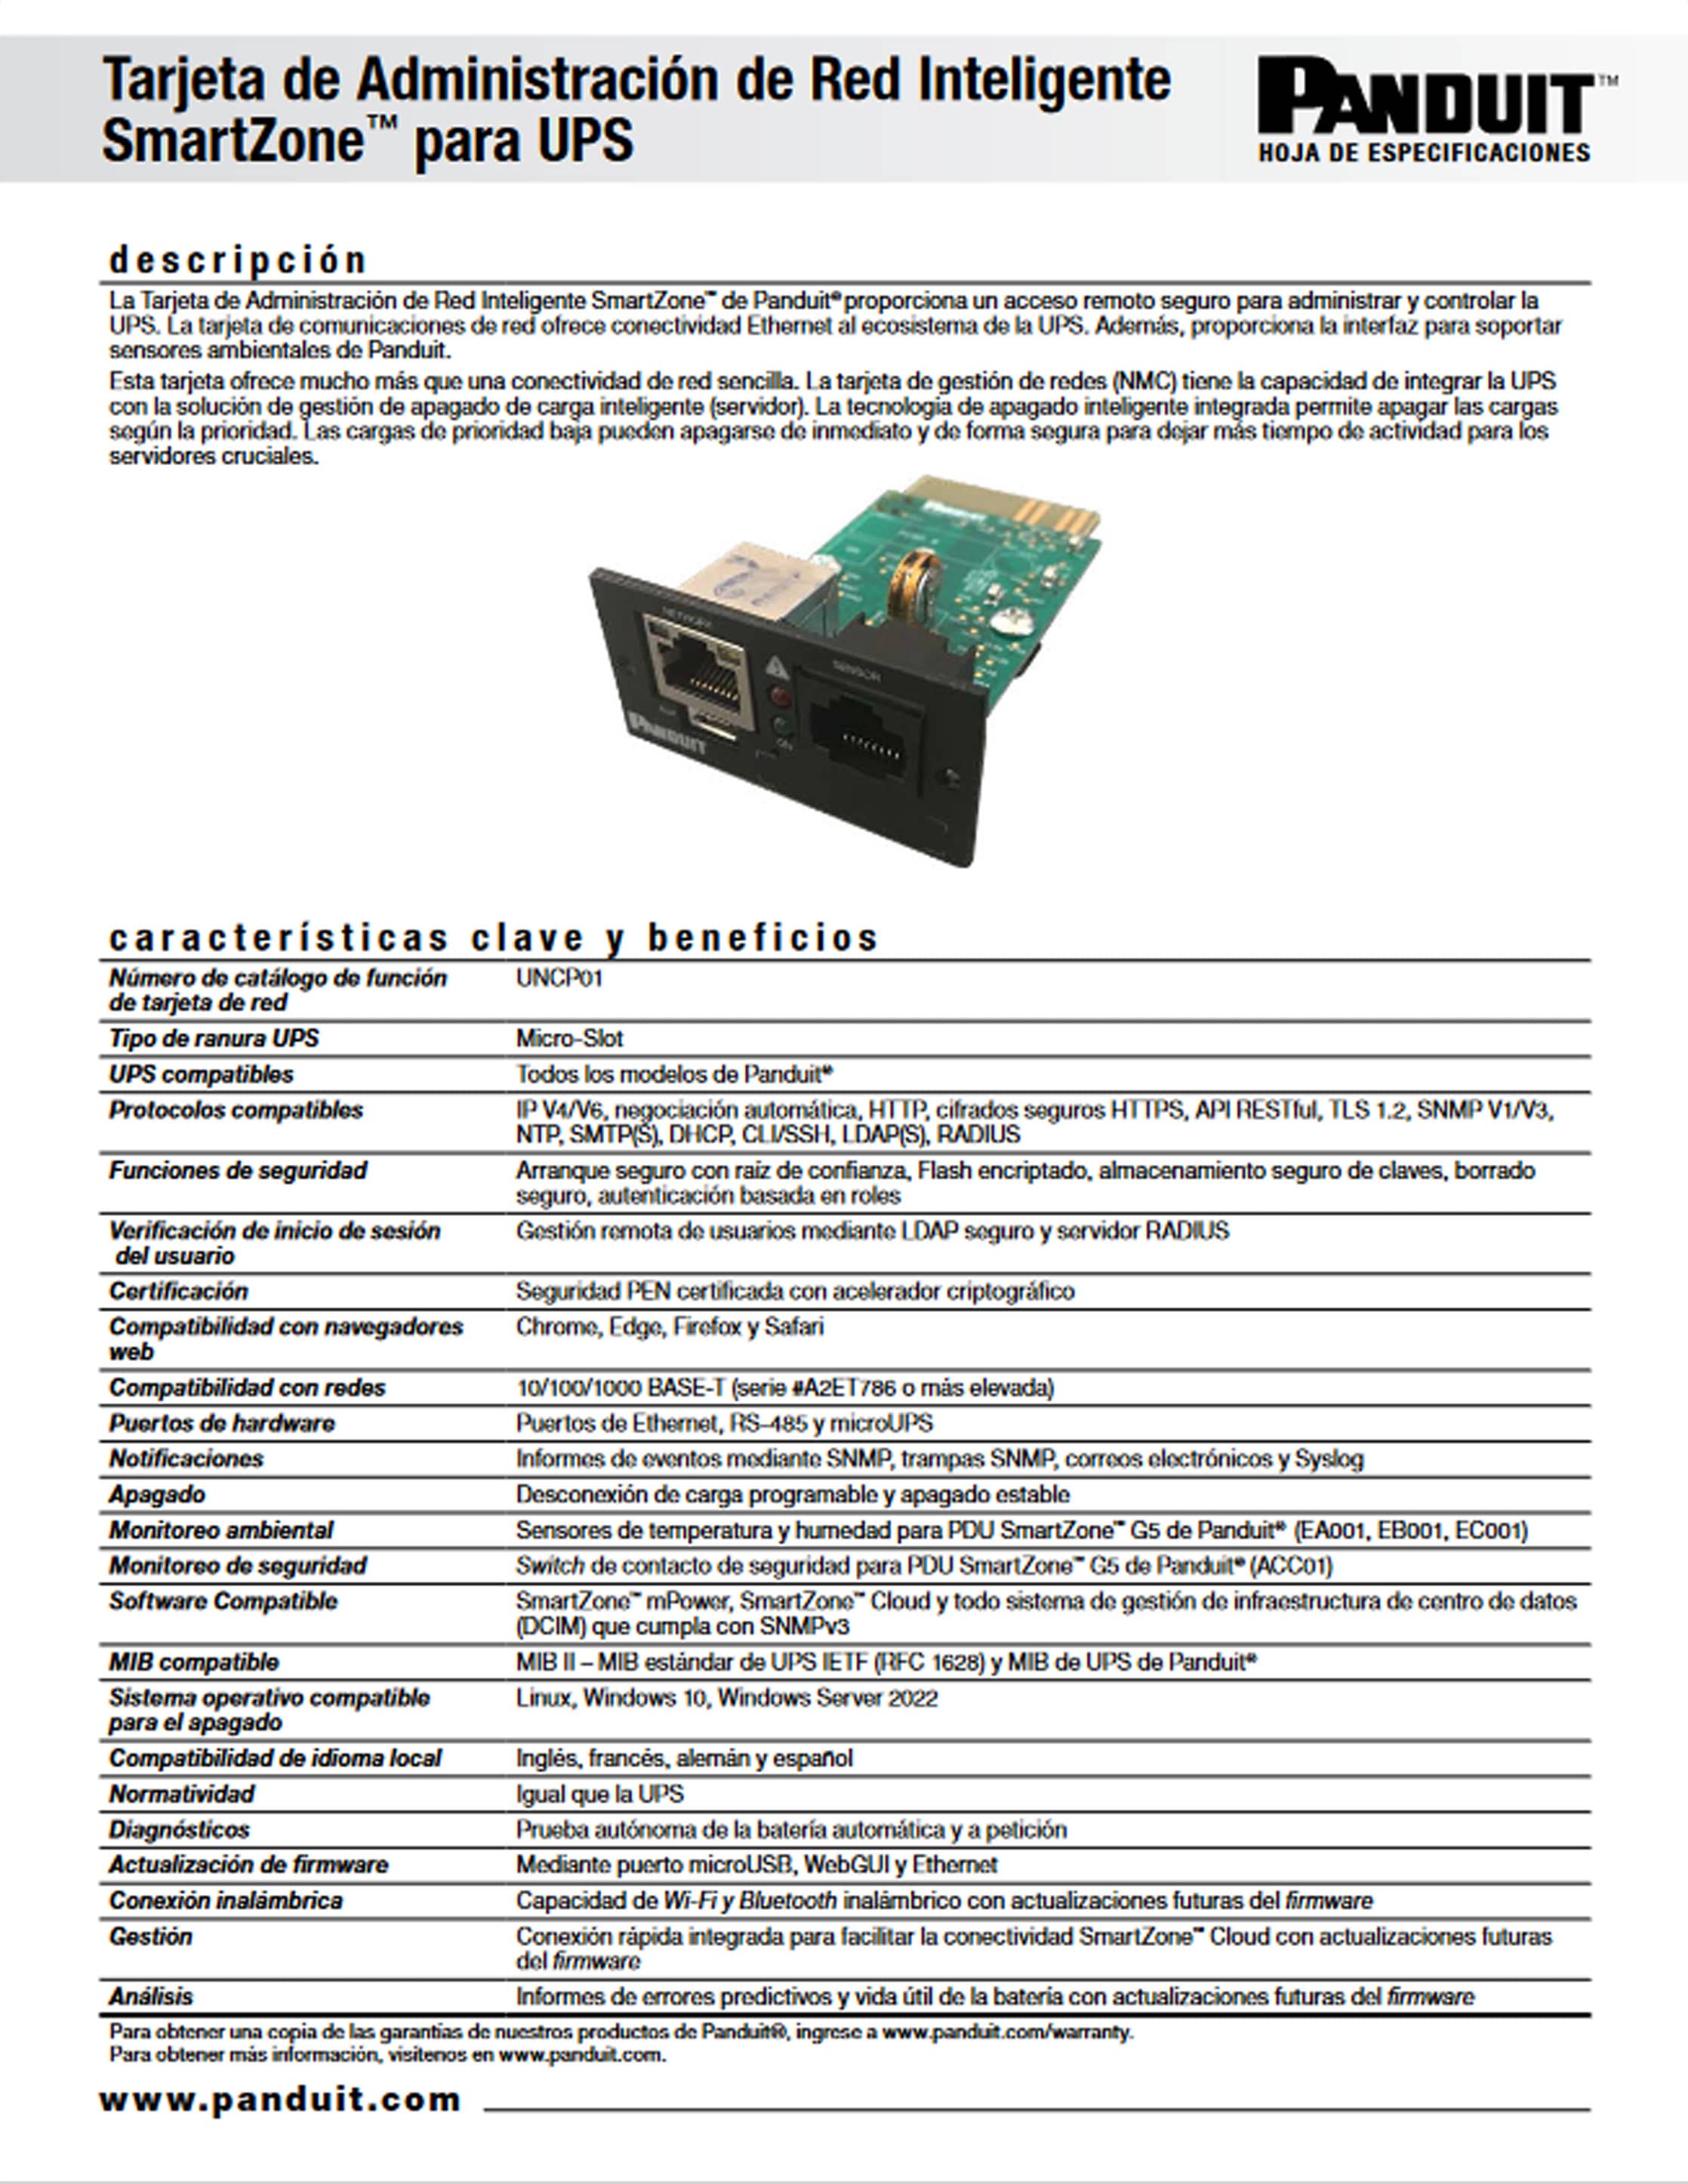 tarjeta-de-administracion-de-red-inteligente-SmartZone-para-UPS-panduit.jpg